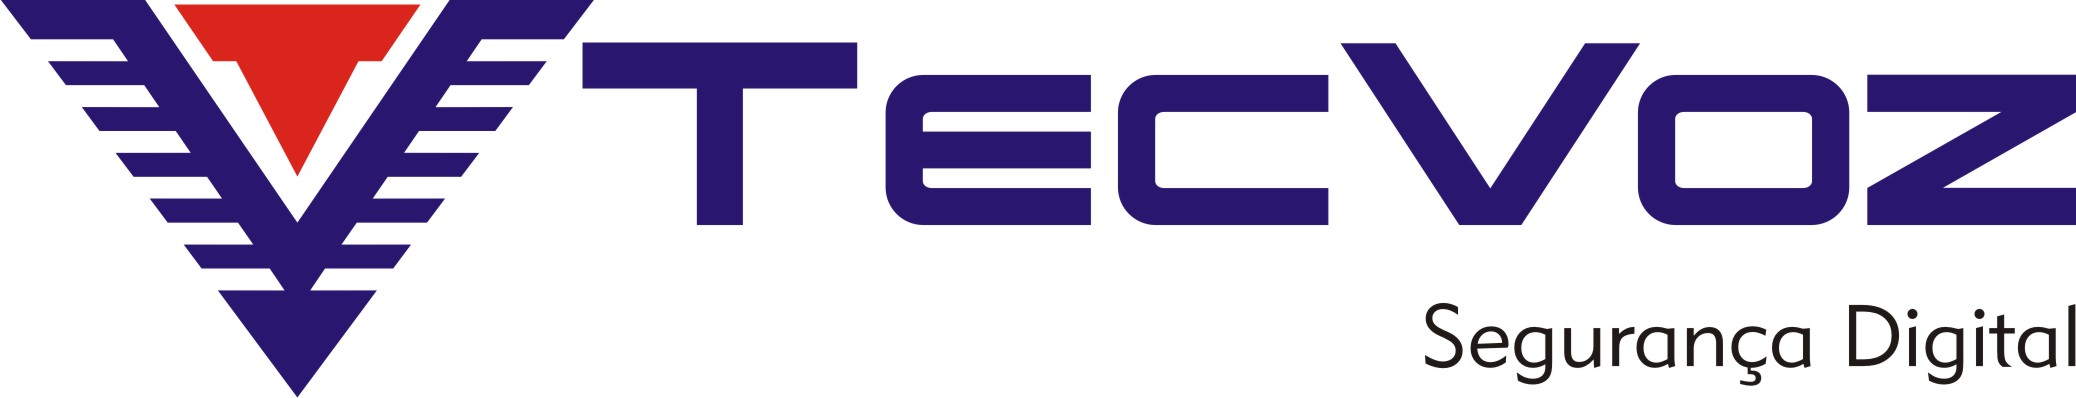 TecVoz Segurança Digital Logo photo - 1